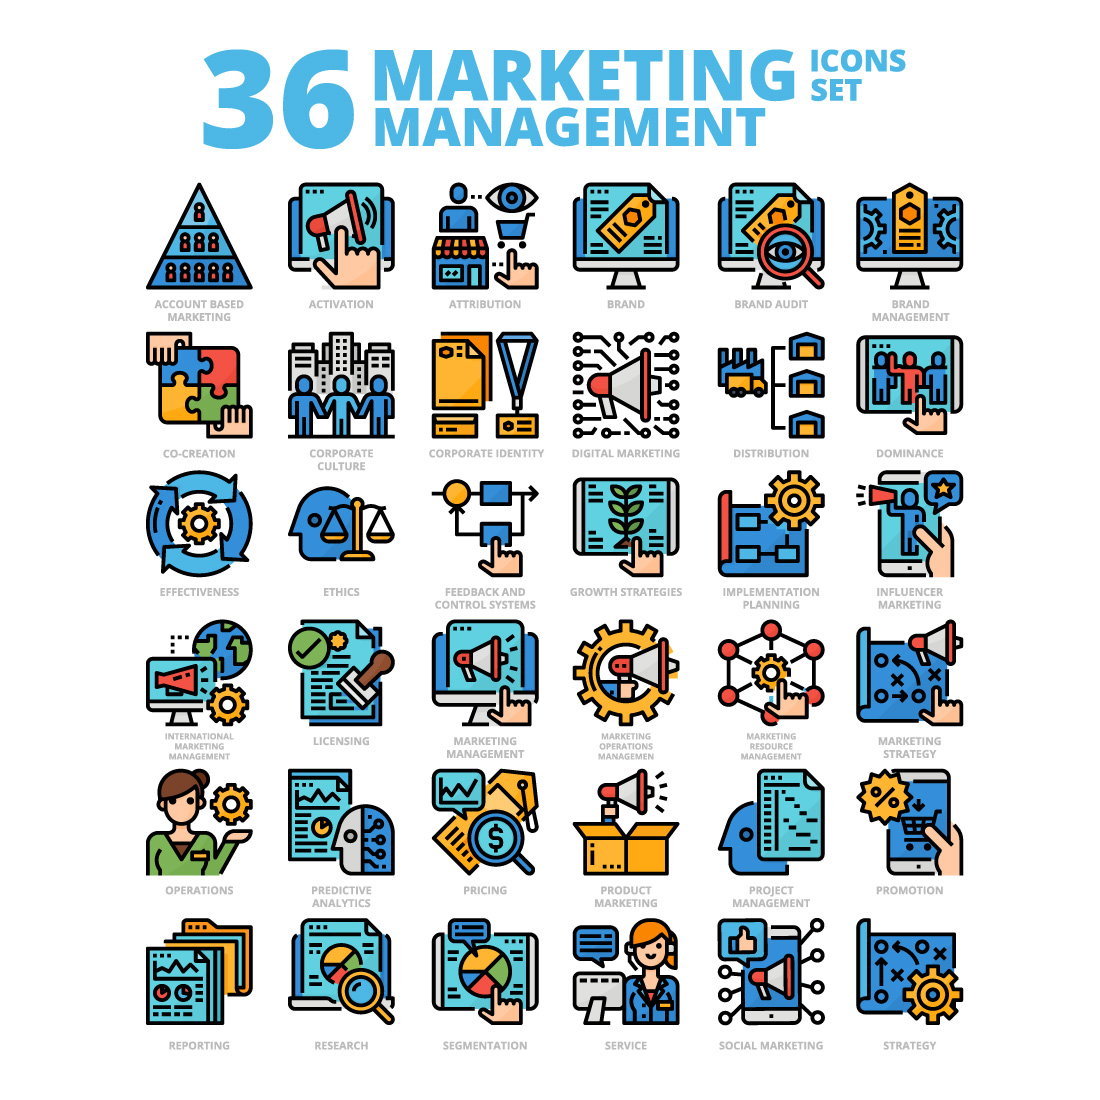 36 Marketing Management Icons Set x 4 Styles cover image.